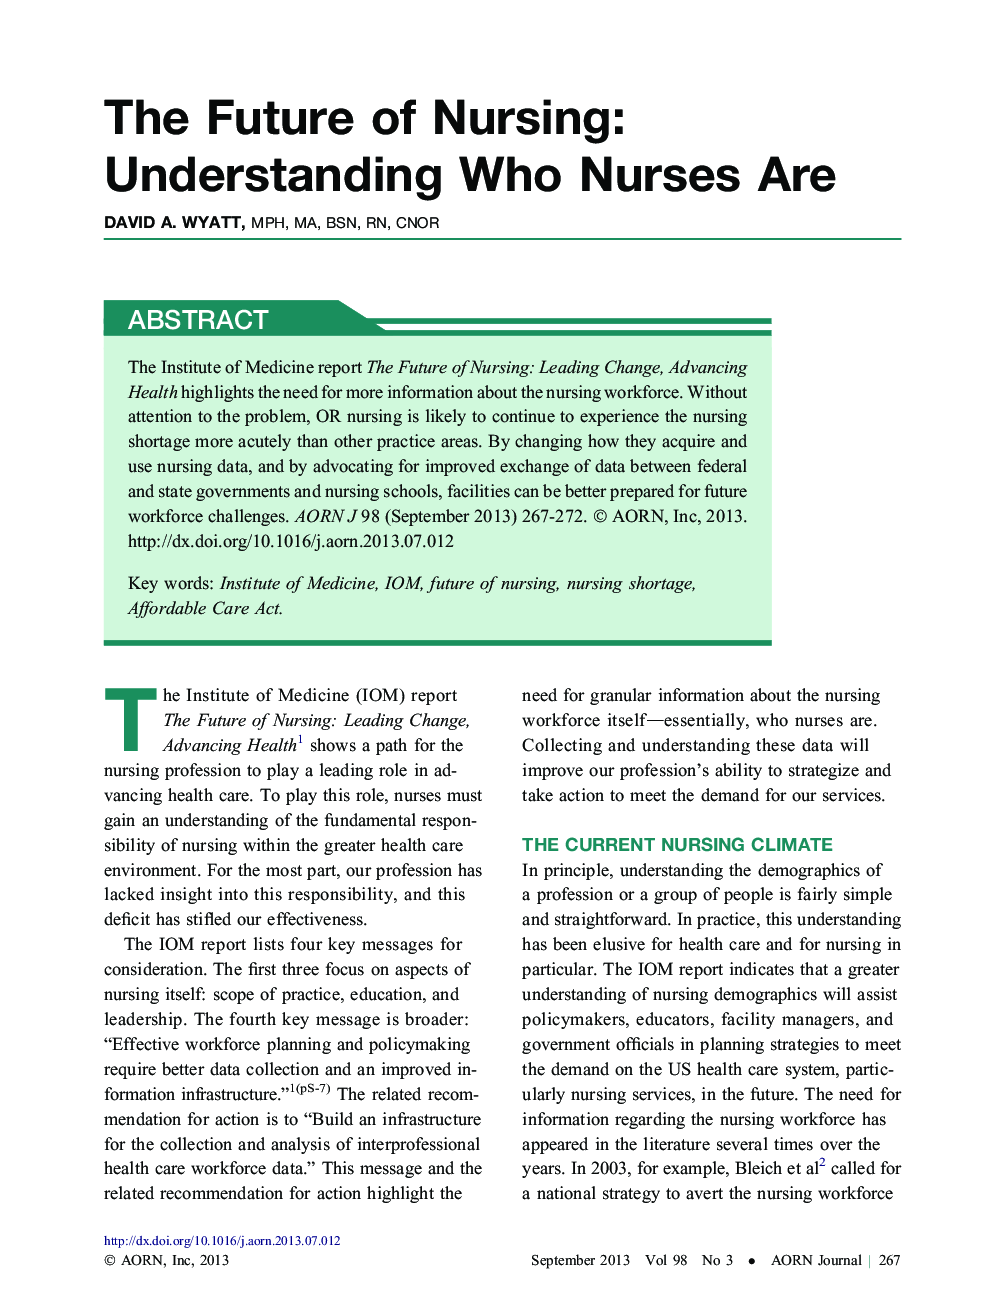 The Future of Nursing: Understanding Who Nurses Are